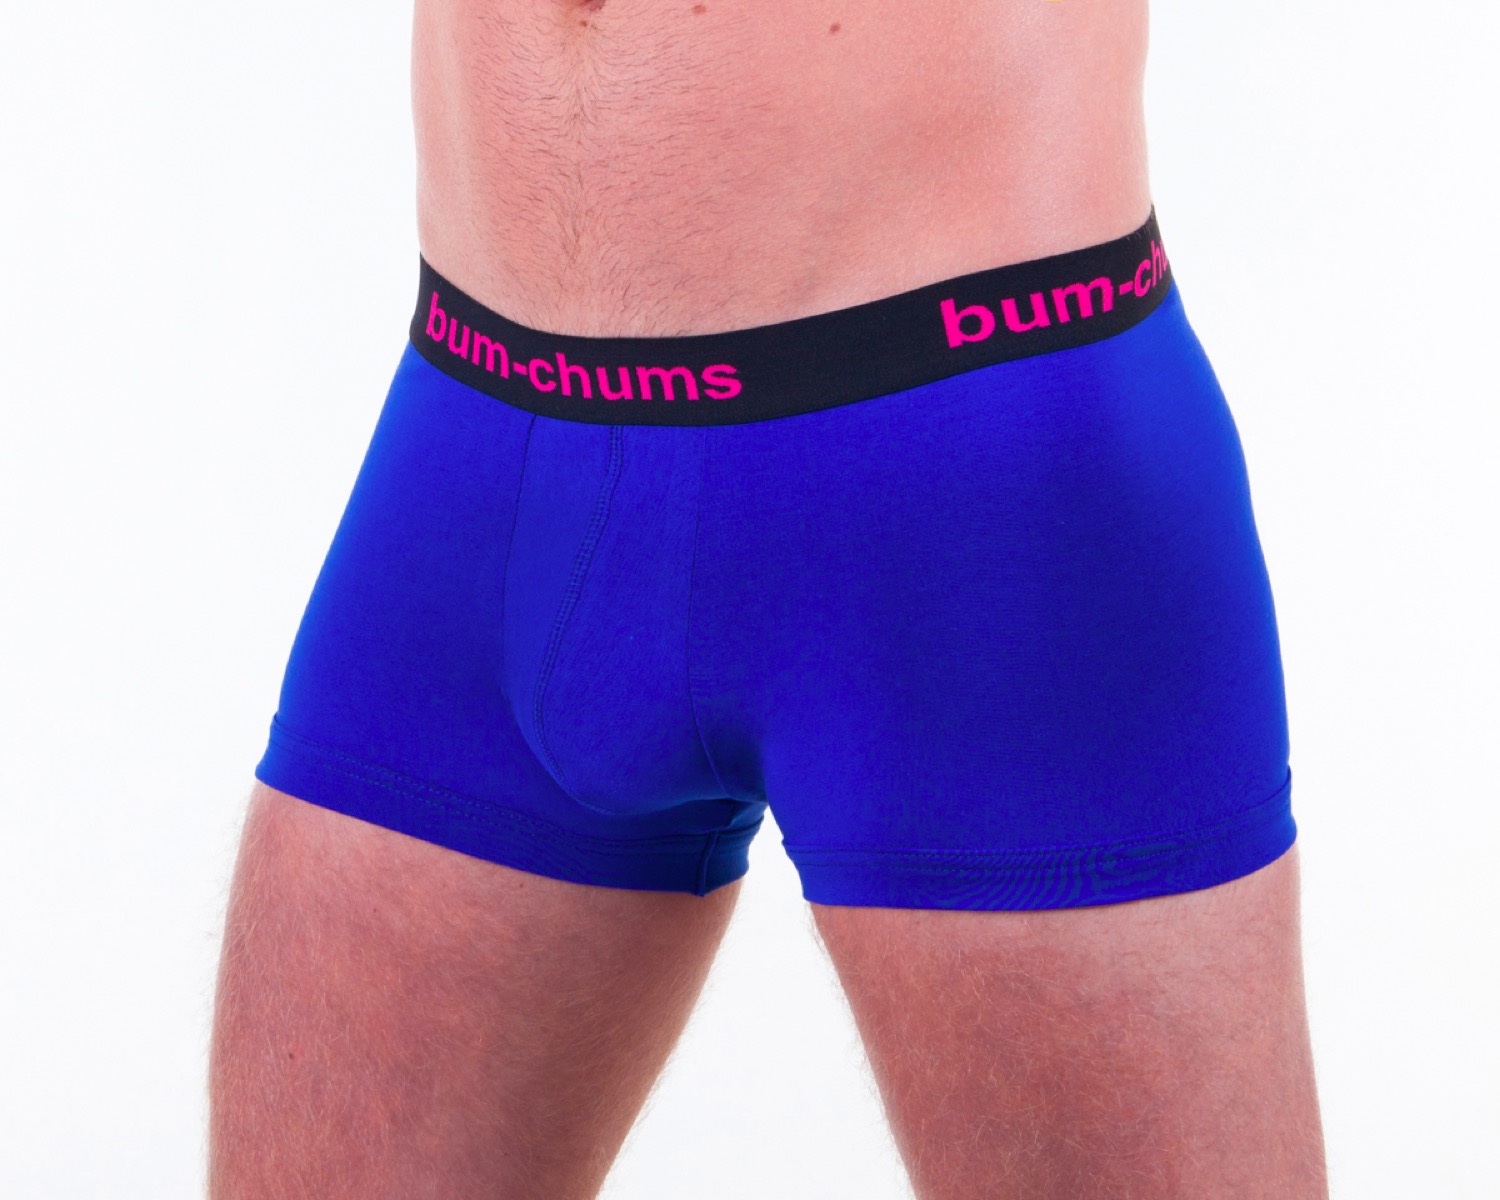 Basik Af Collection From Bum Chums Underwear News Briefs 6586